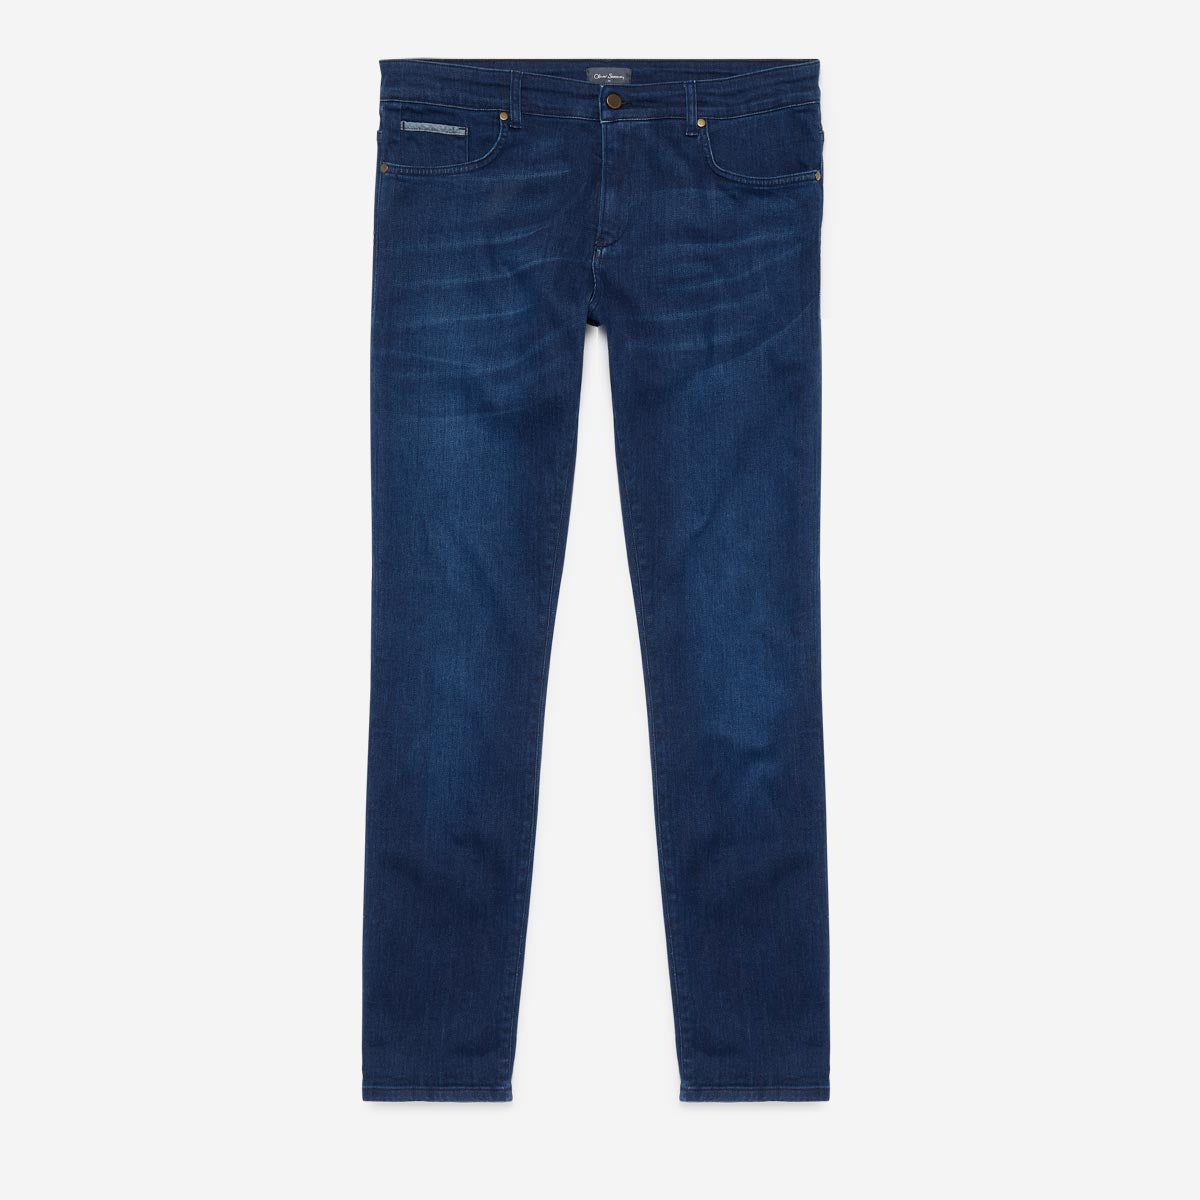 Navigli Blue Jeans | Men's Denim Jeans | Oliver Sweeney